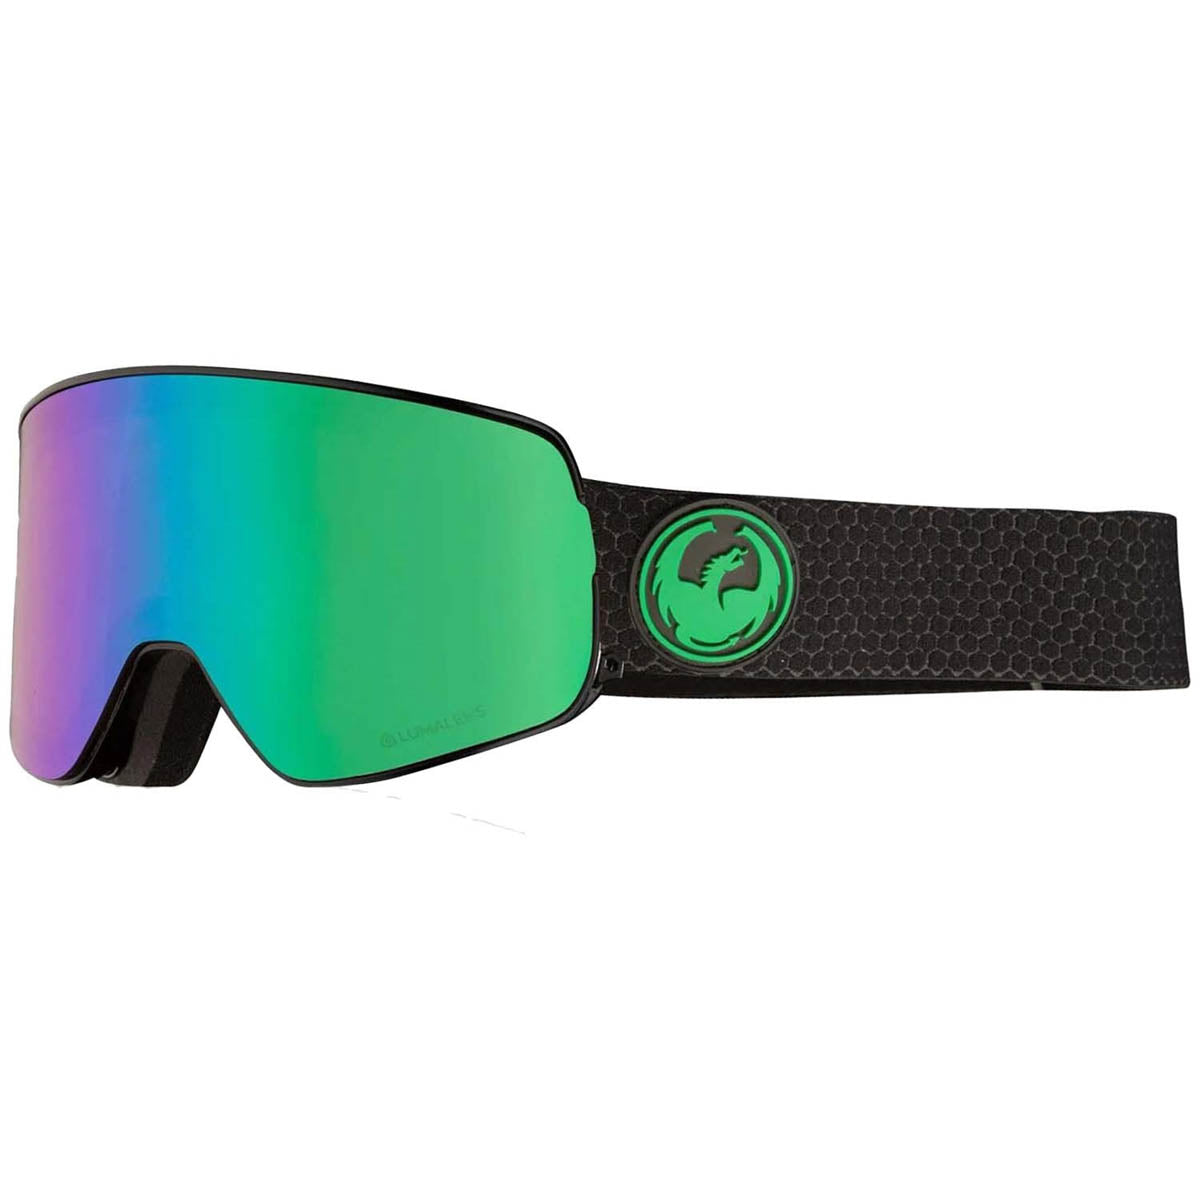 Dragon Nfx2 Snowboard Goggles - Split/Lumalens Green Ion image 1